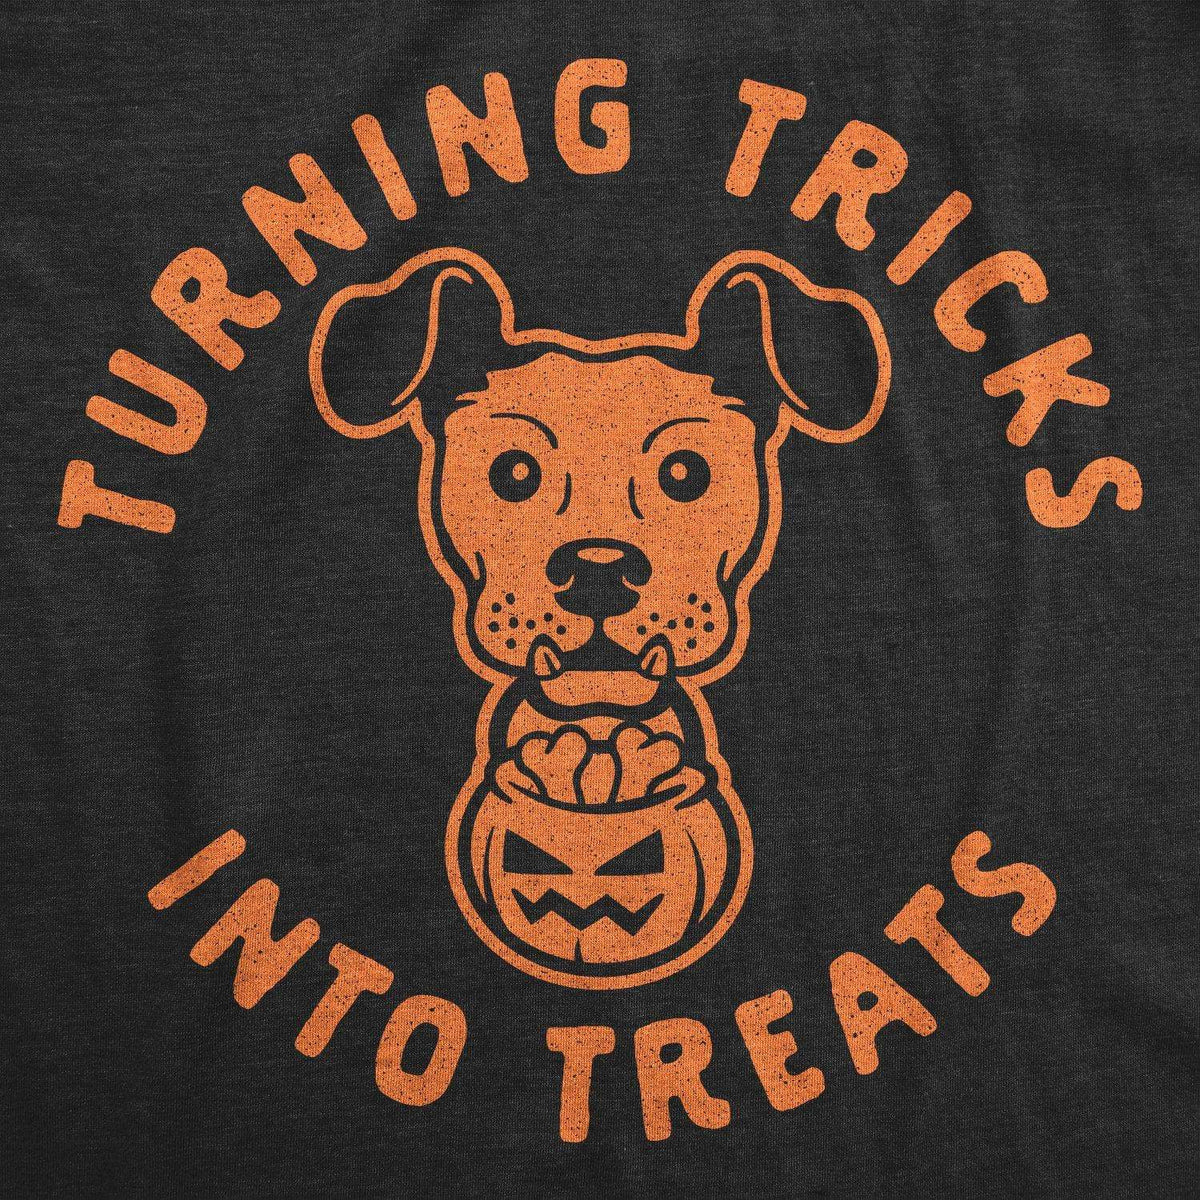 Turning Tricks Into Treats Women&#39;s Tshirt - Crazy Dog T-Shirts